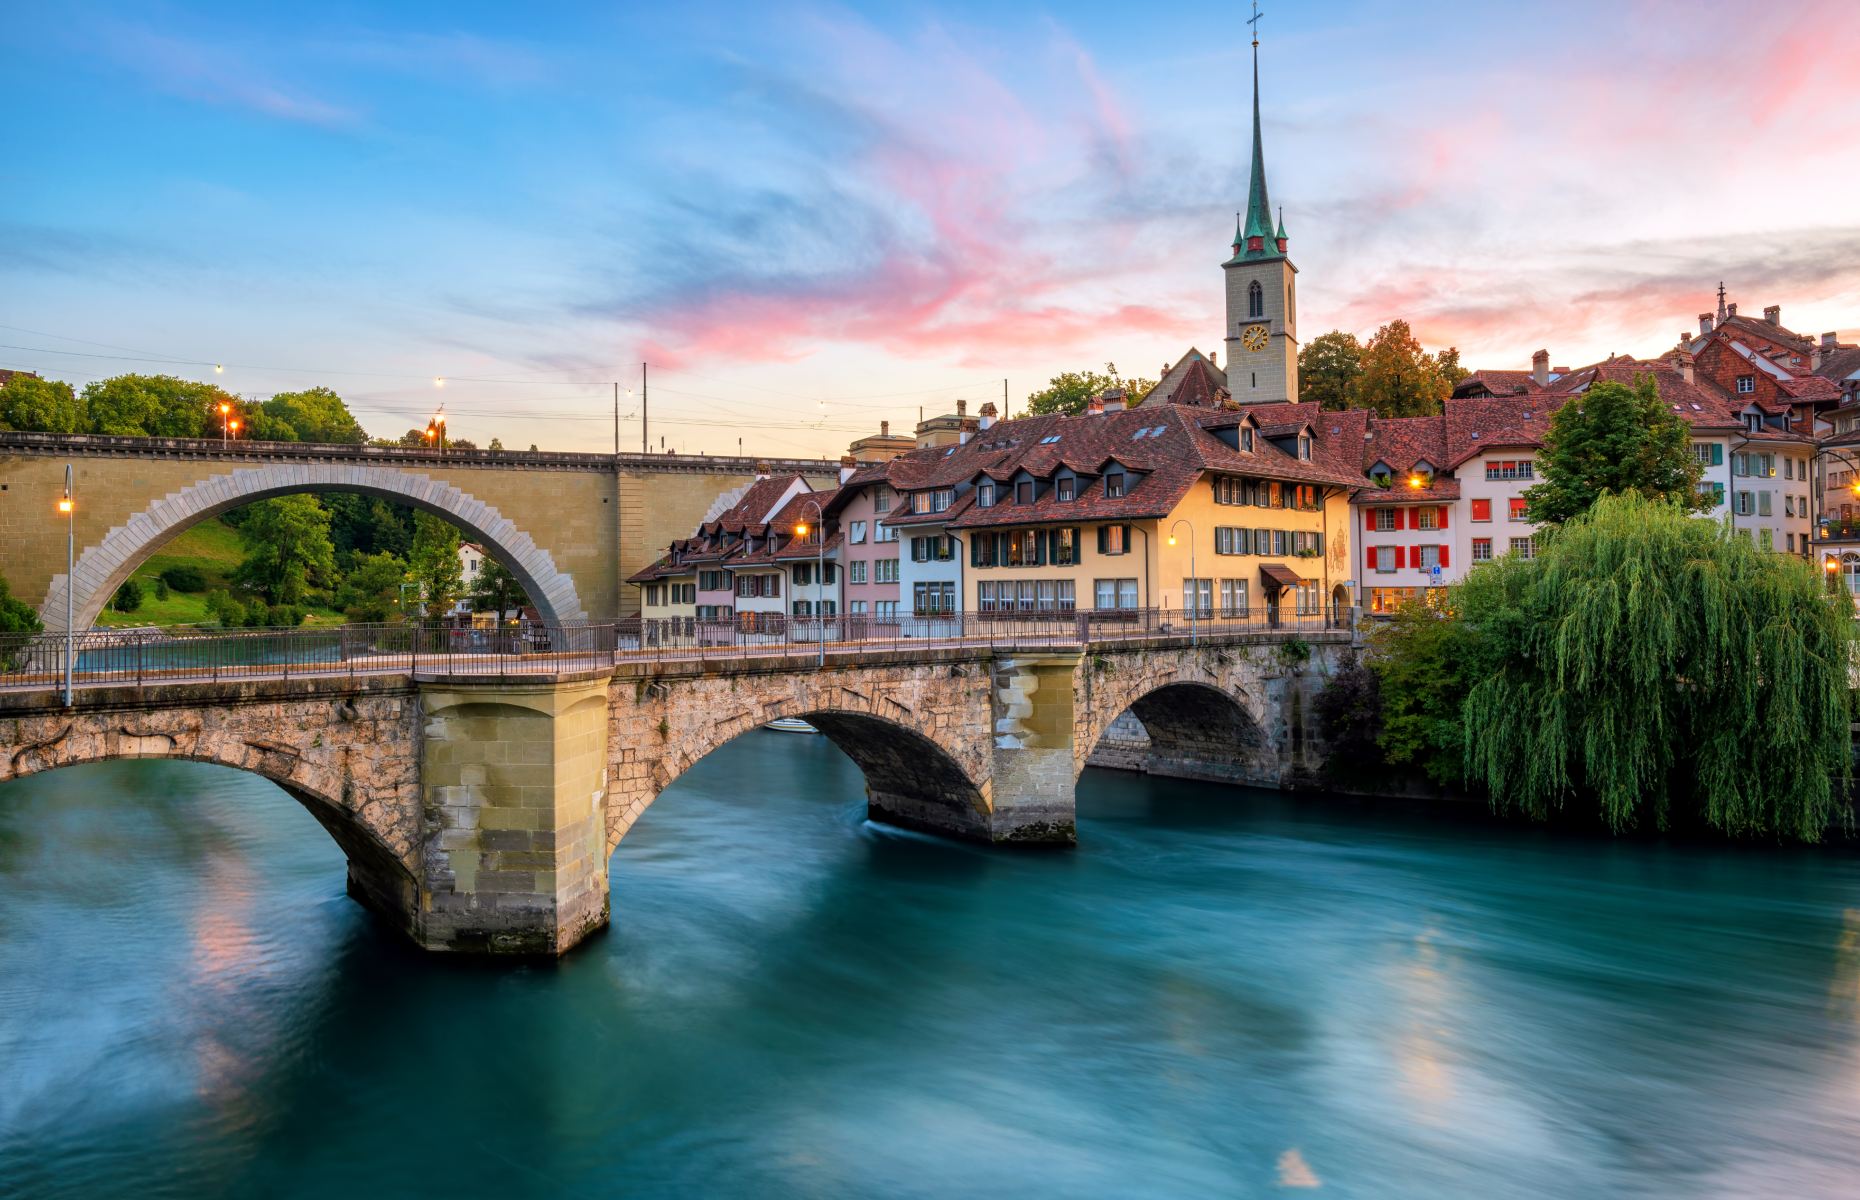 Old Town, Bern, Switzerland (Image: Boris Stroujko/Shutterstock)